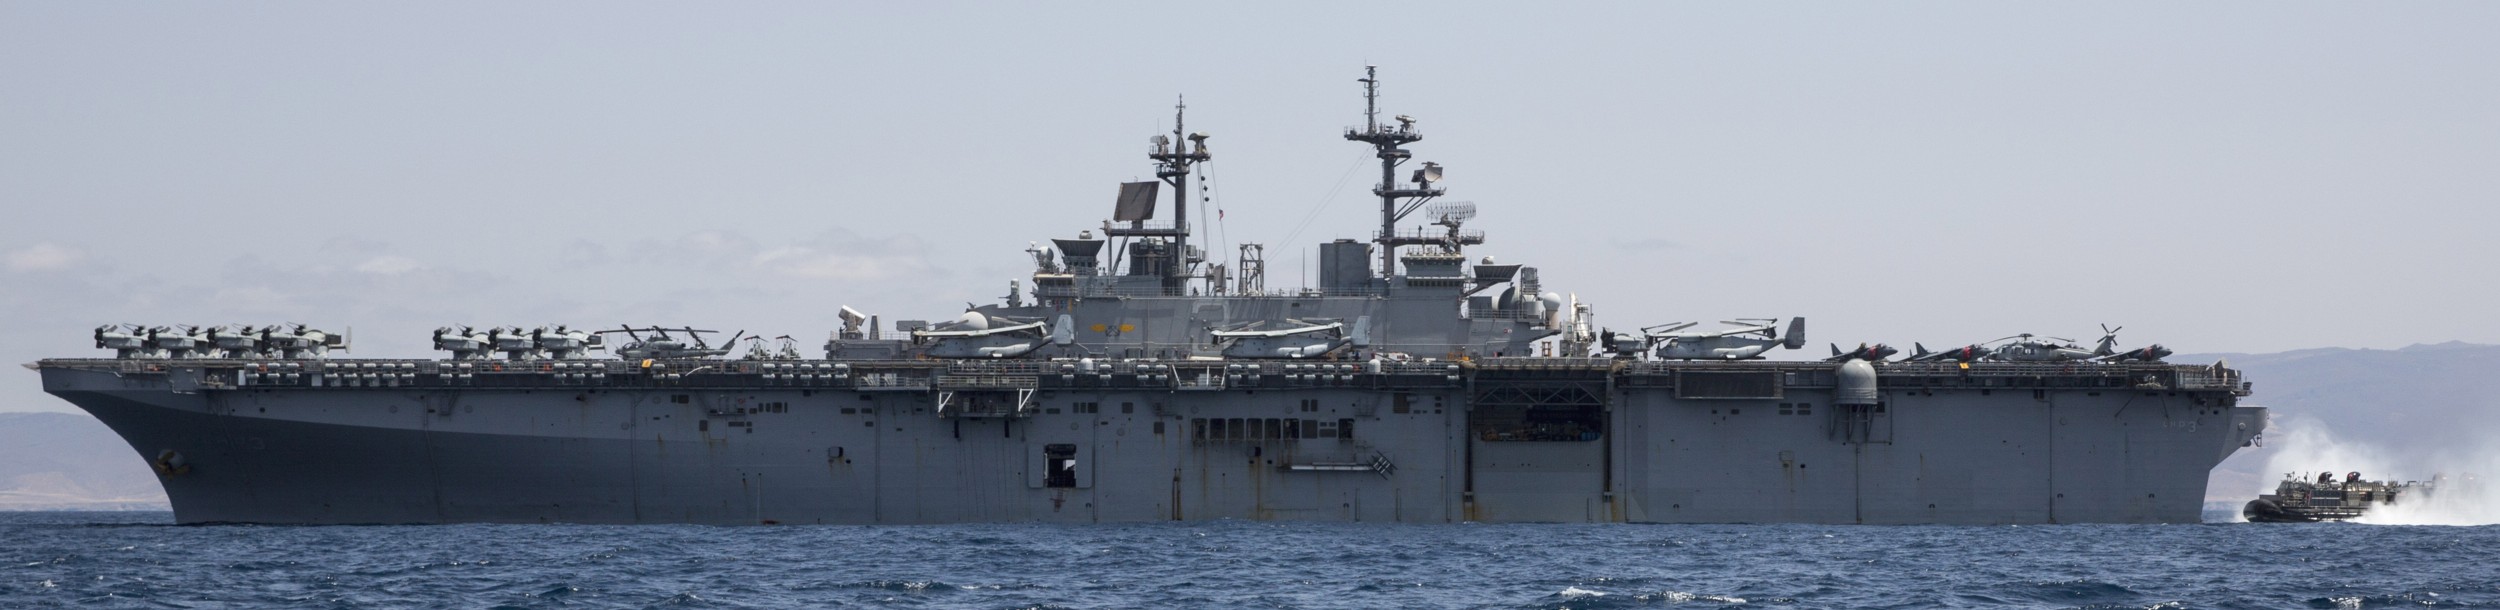 lhd-3 uss kearsarge wasp class amphibious assault ship us navy marines vmm-266 101